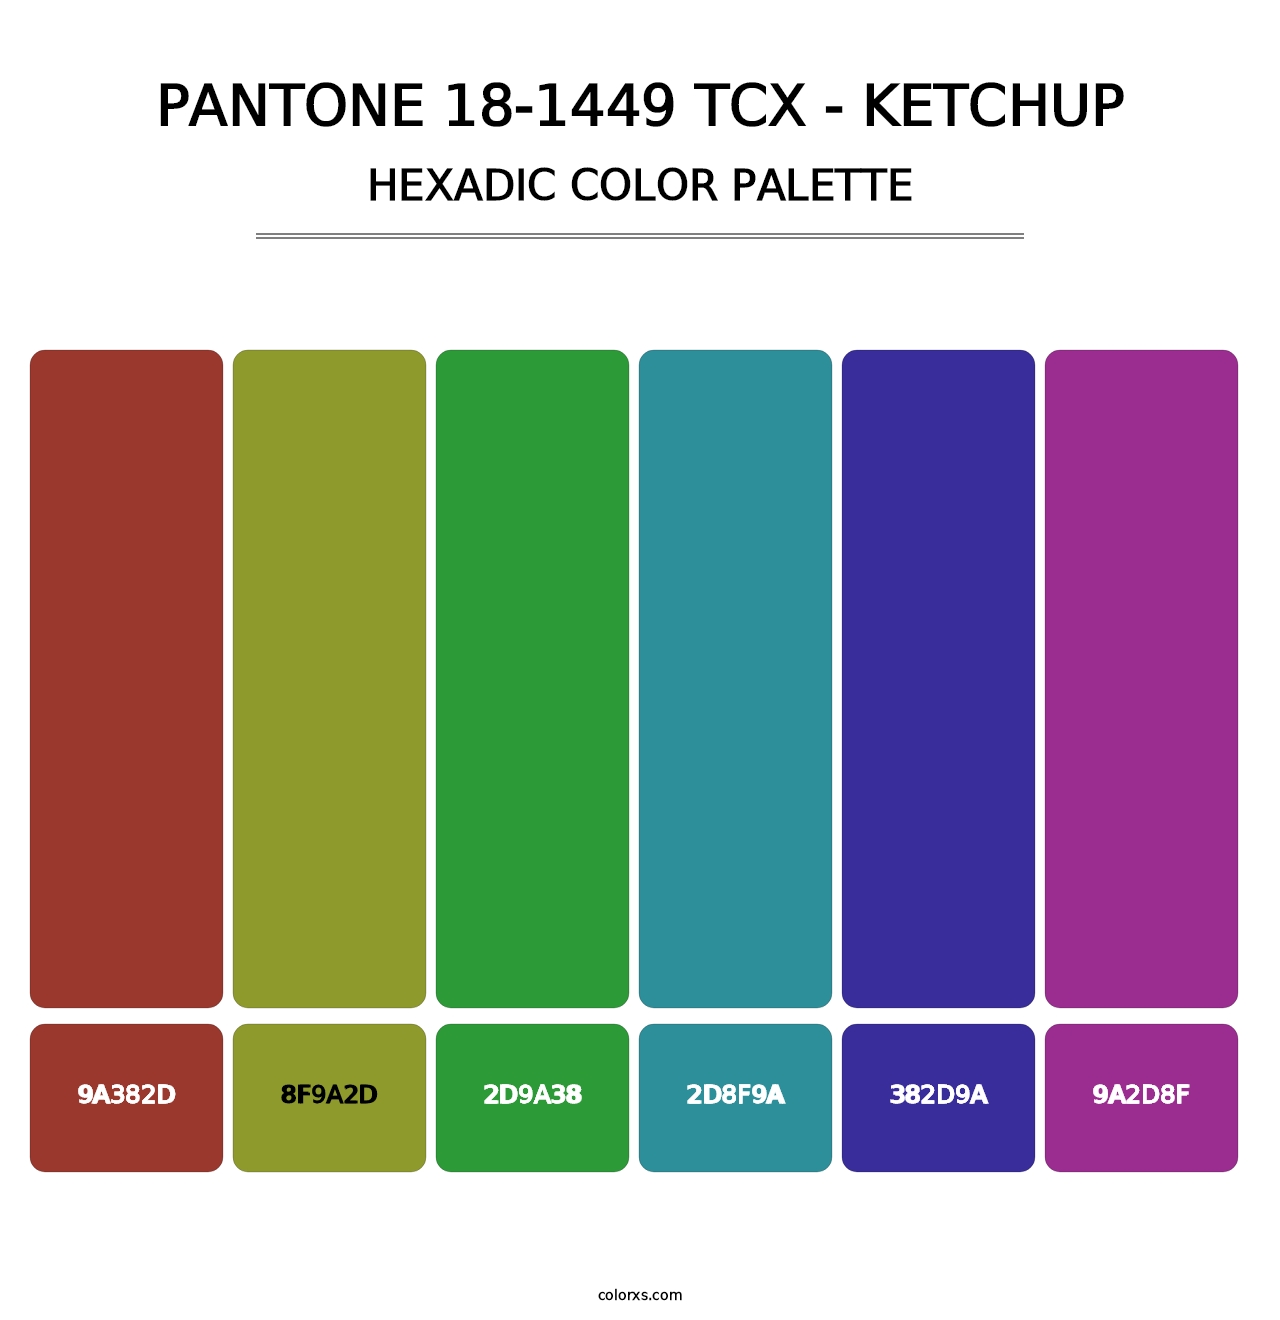 PANTONE 18-1449 TCX - Ketchup - Hexadic Color Palette